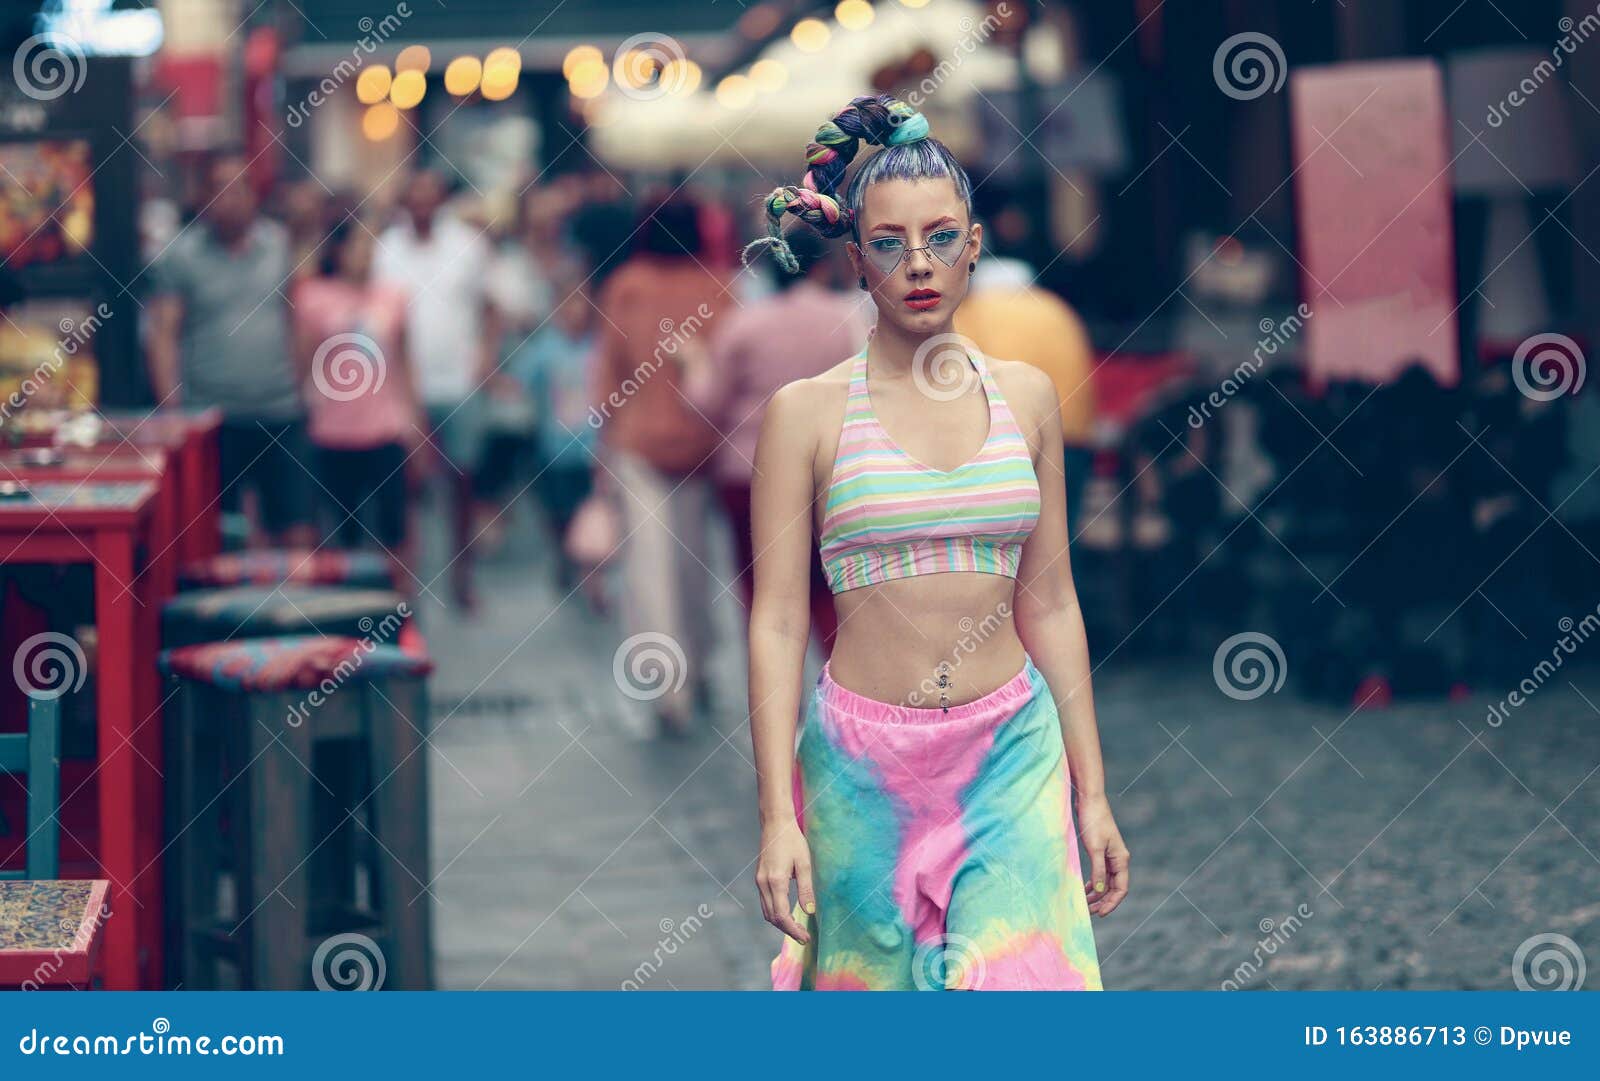 eccentric woman model walking down the street - female nonconformist - unconventional girl